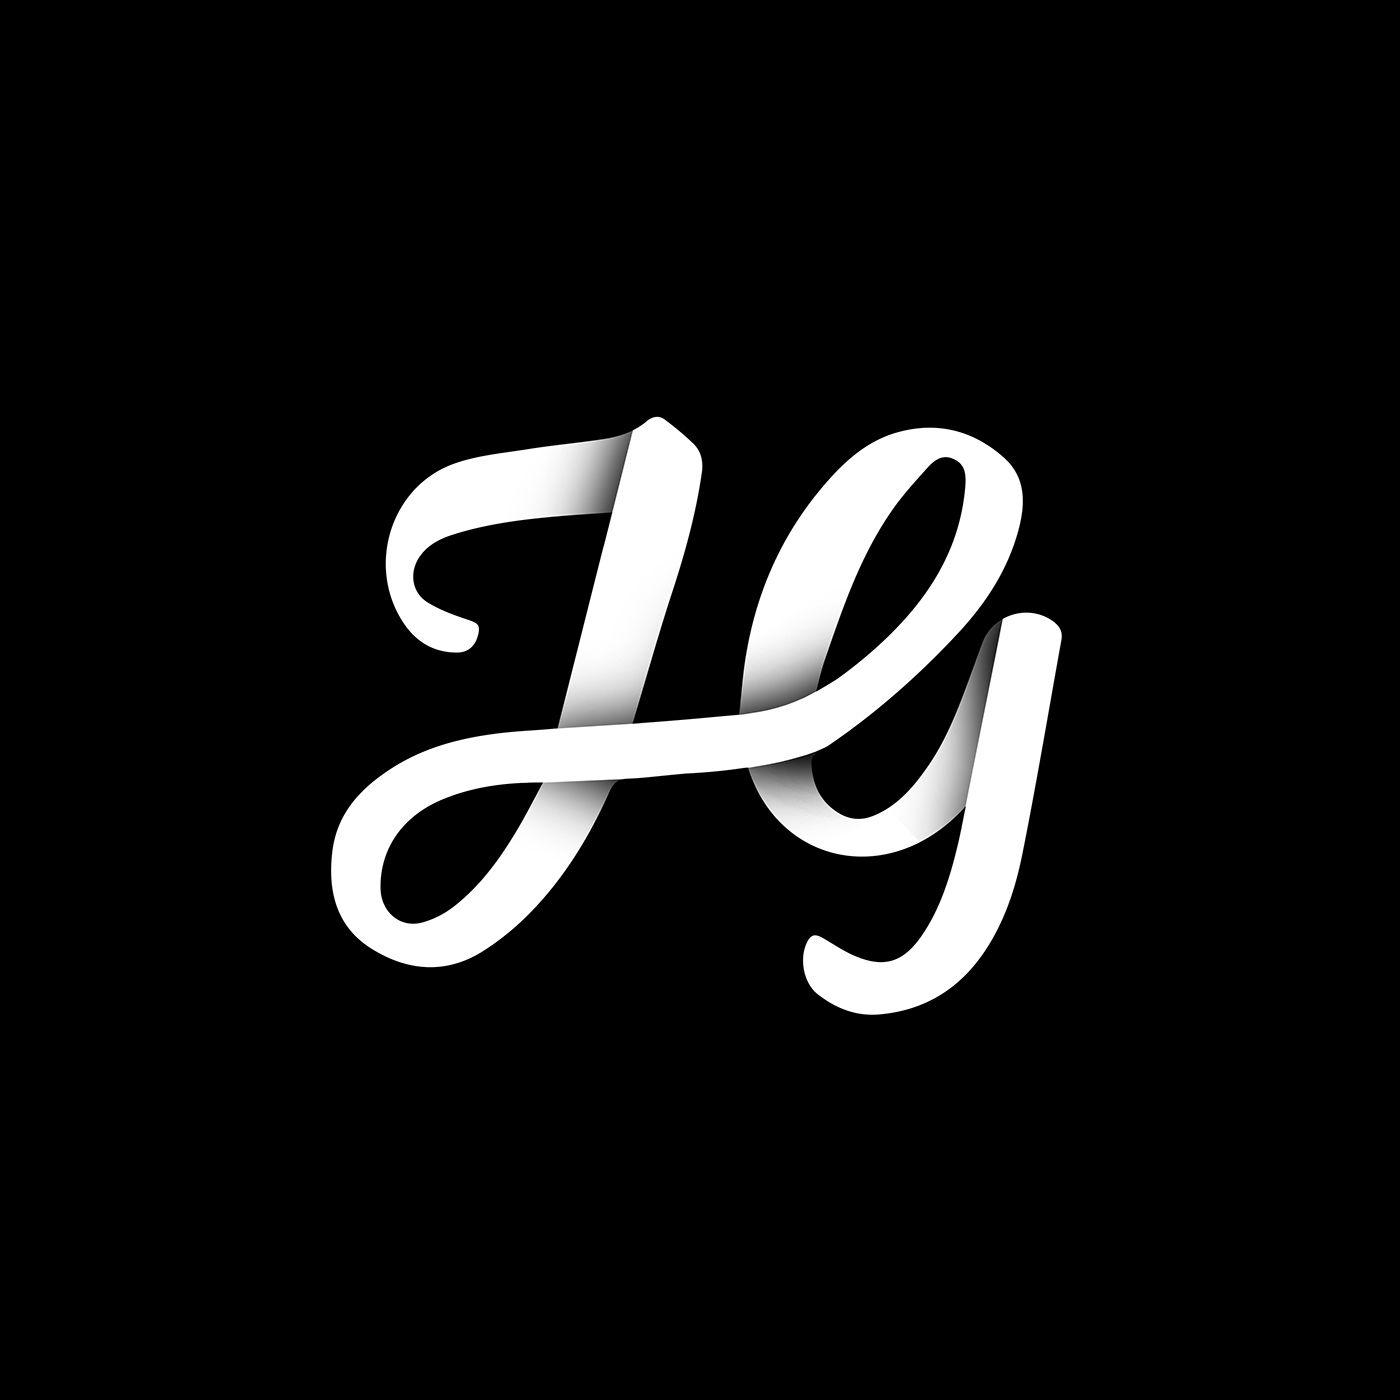 HG Logo - HG Monogram